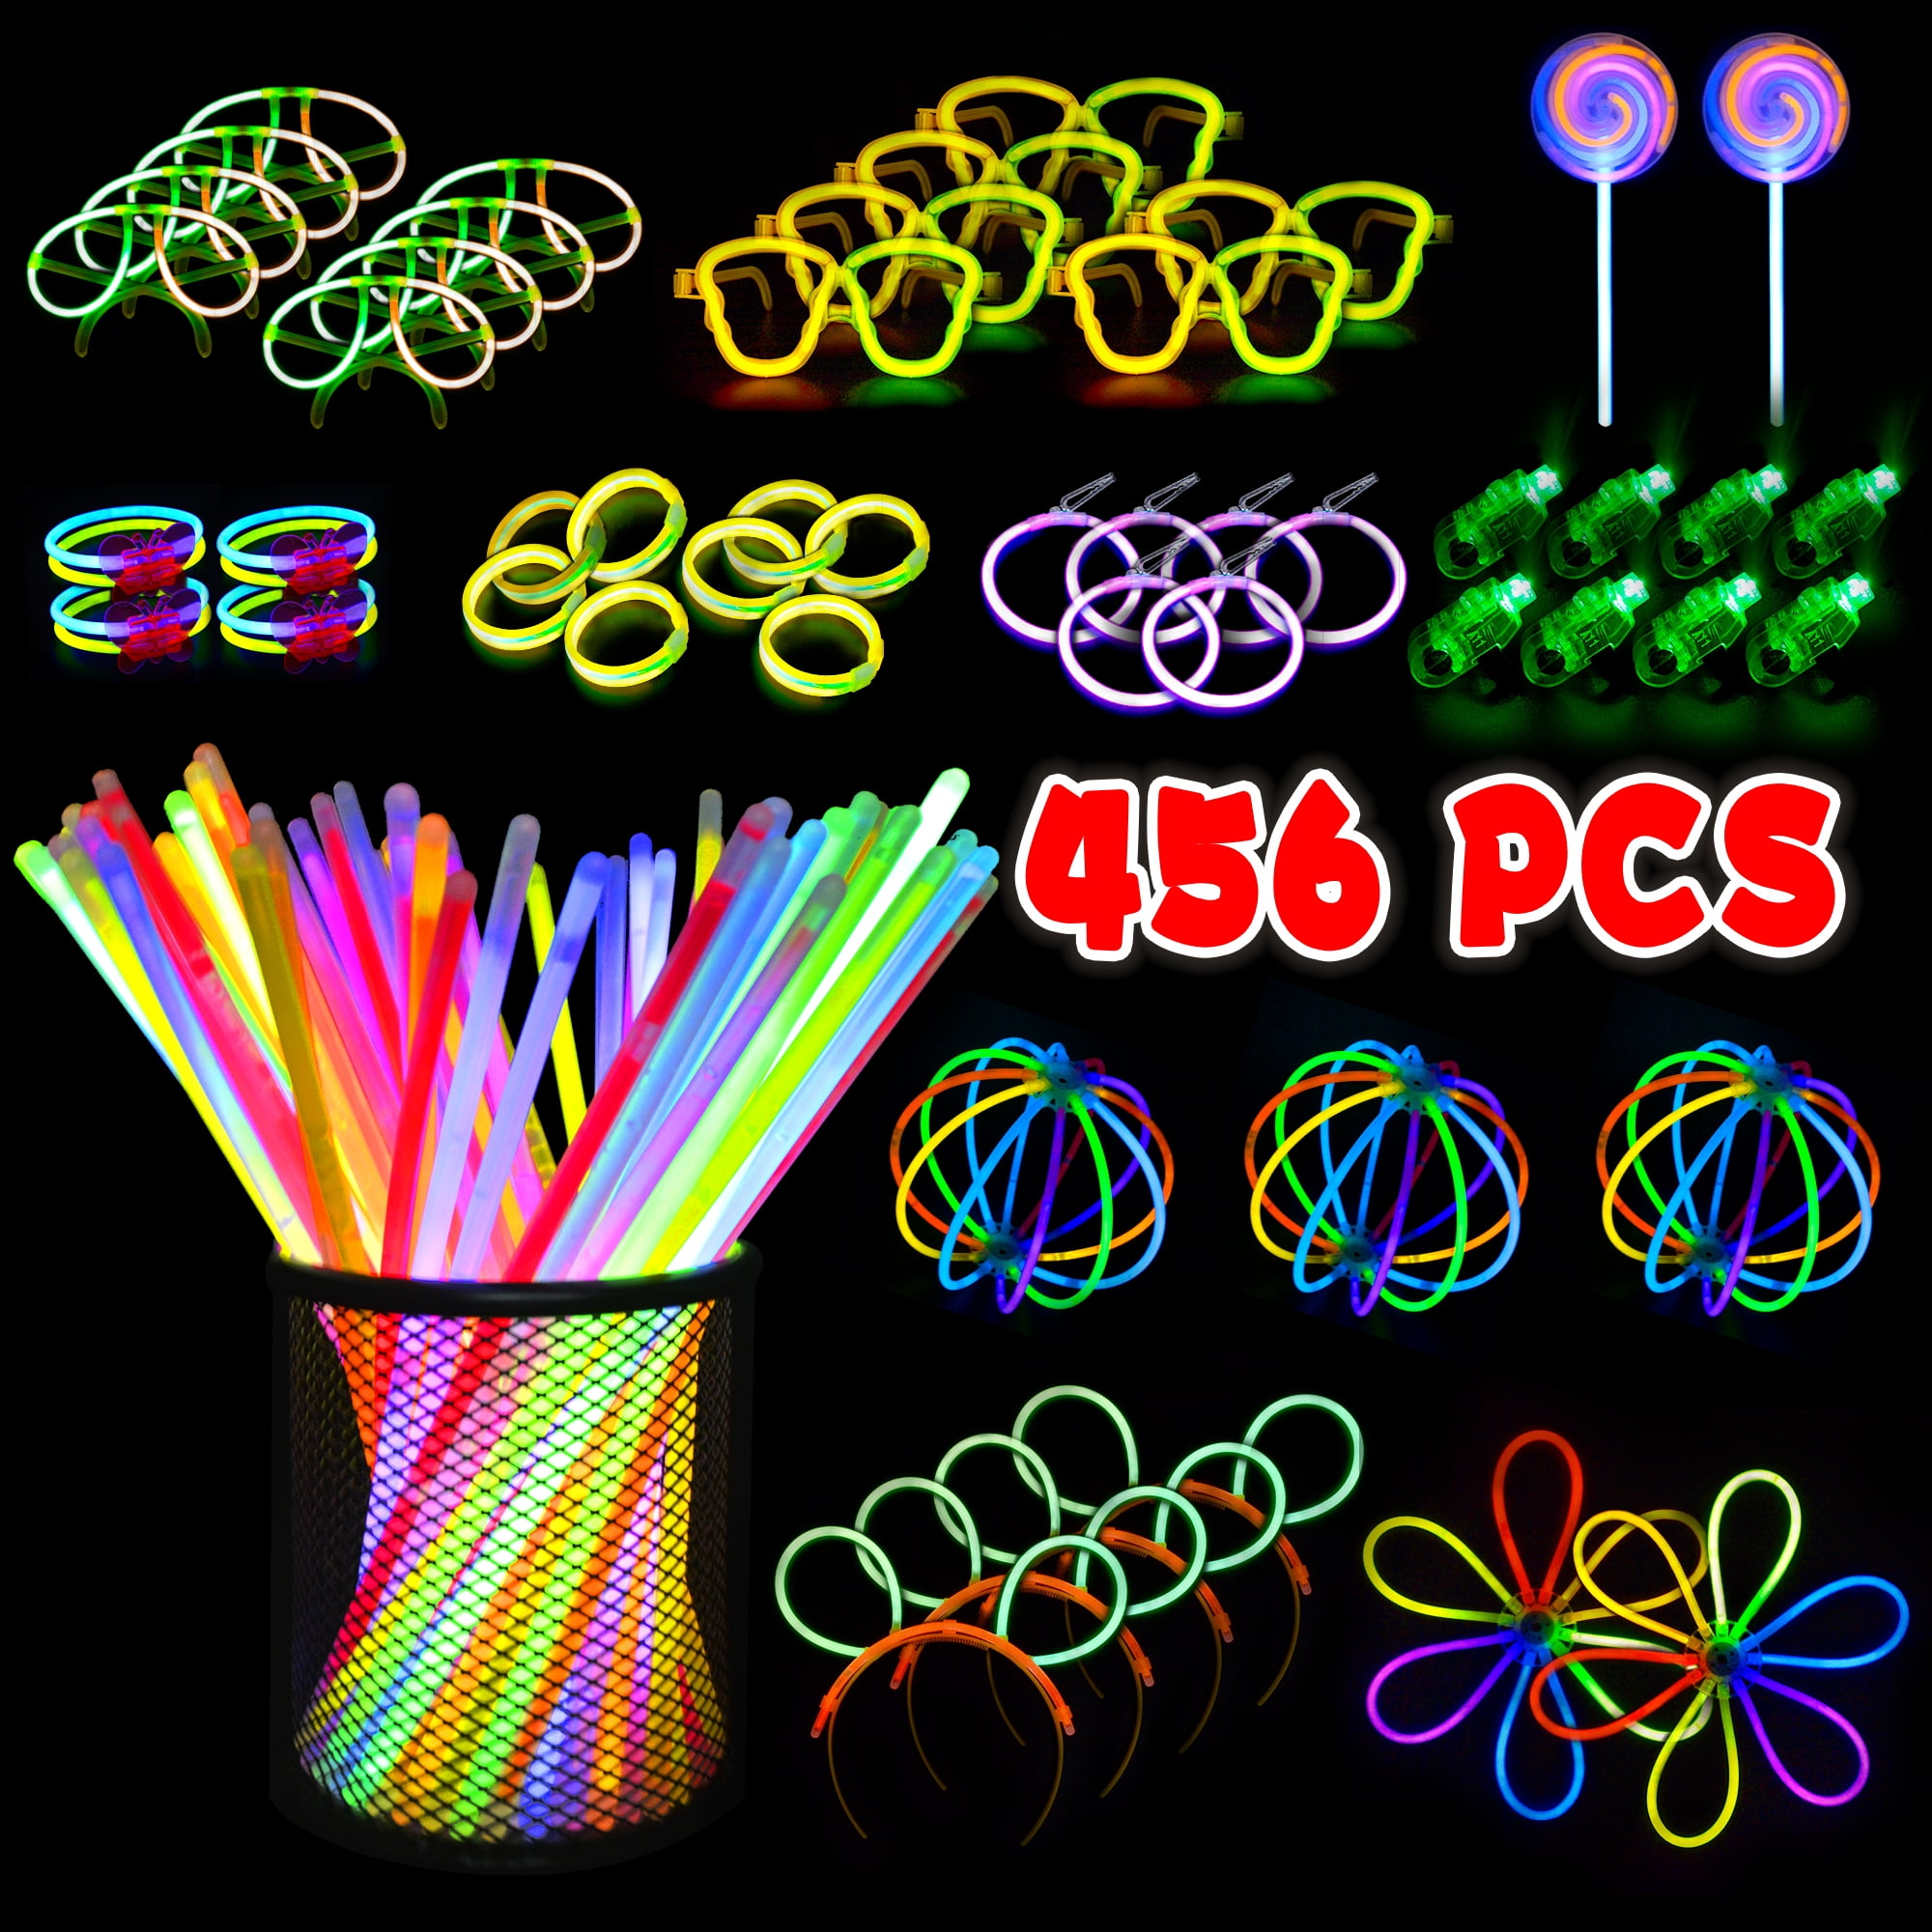 ABC 456 Pcs Glow Sticks Bulk Halloween Birthday Party Concert Pack